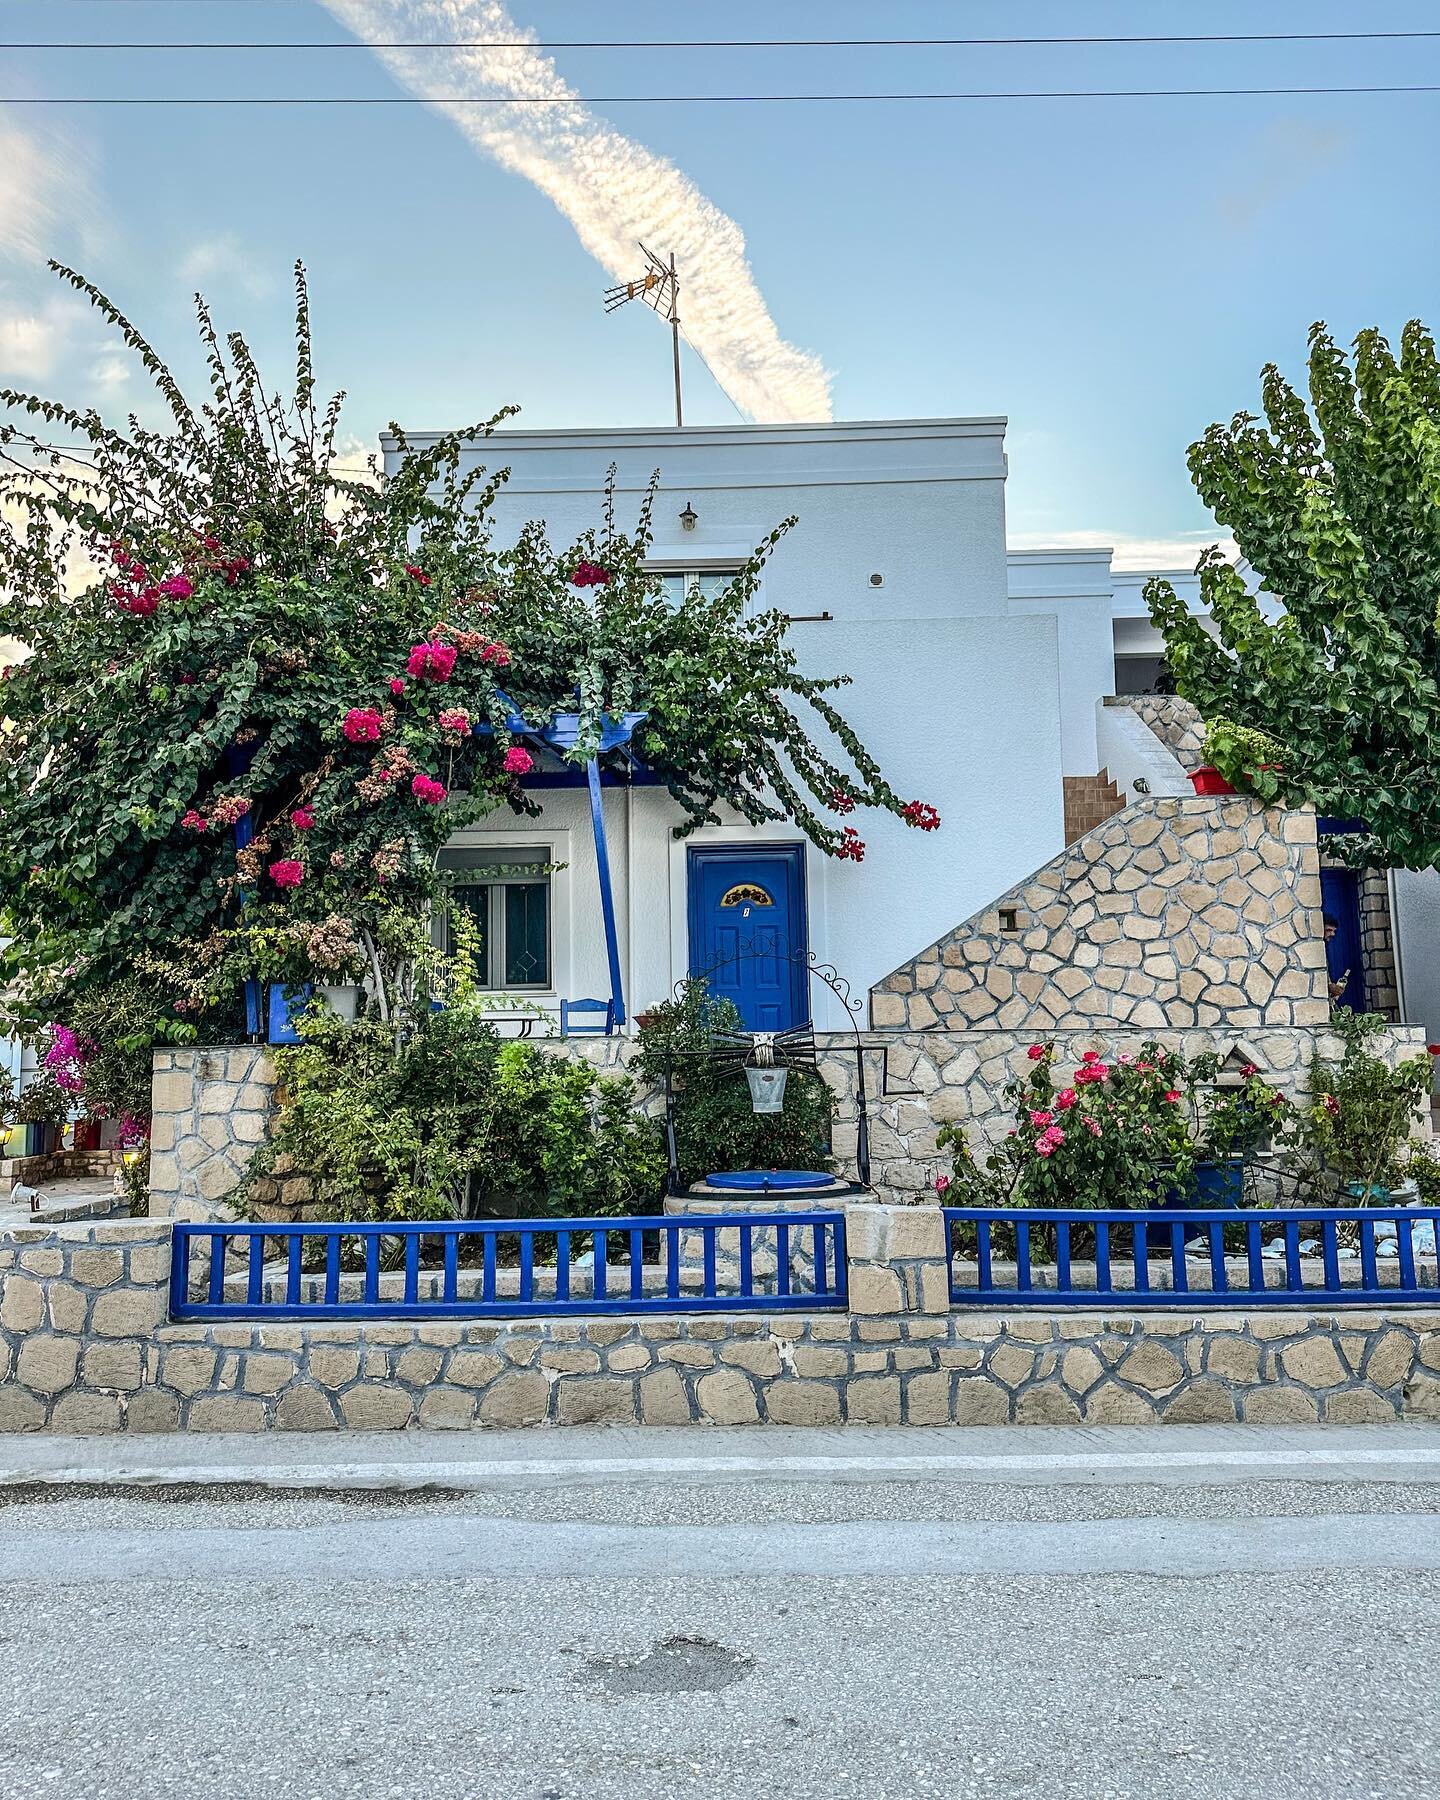 Milos&hellip;honeymoon part 1 ☀️🍉
@ssaliman 

#milos #cylades #greece #honeymoon #greek #colours #greekcolours #artistcolourpalette #ultramarine #greekislands #islandhopping #greeksummer #sarakiniko #polloniamilos #milosvillas #milosvillage